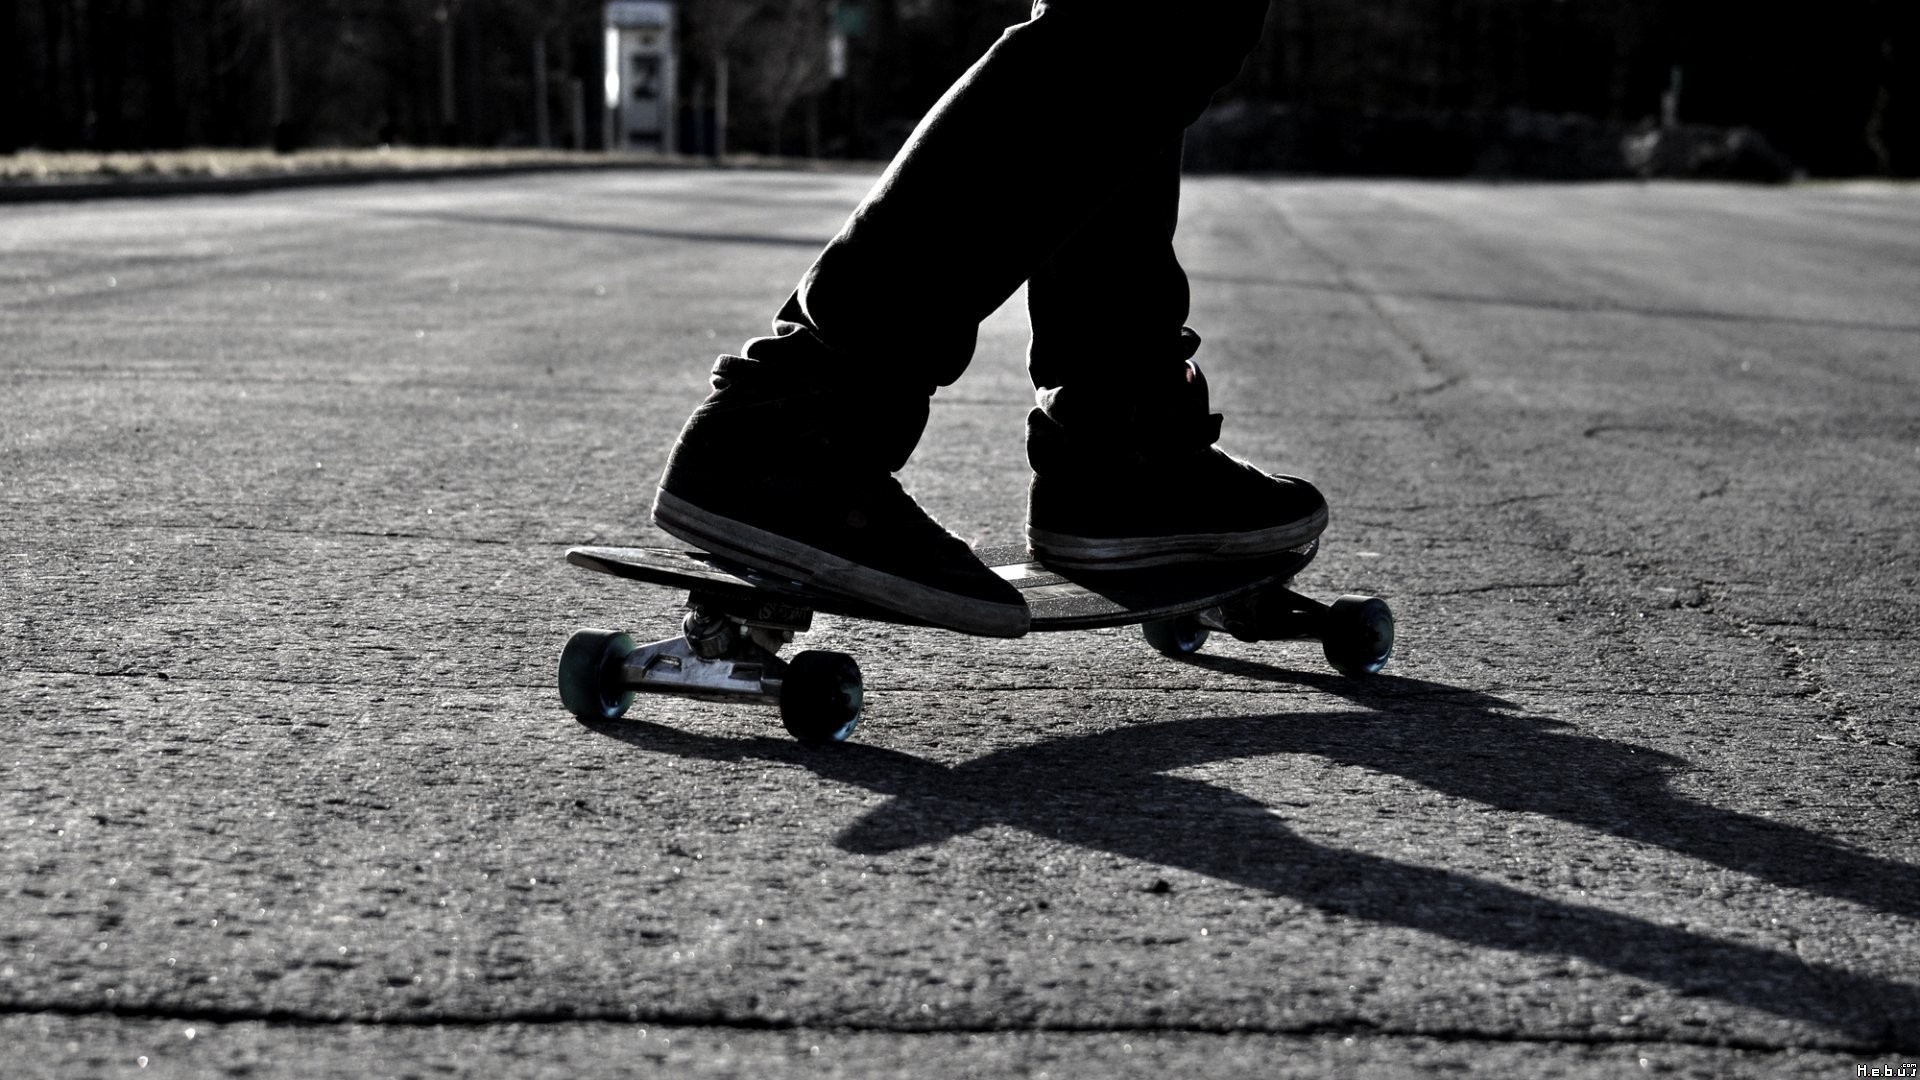 Skateboarding: Monochrome classic street skateboard, Outdoor recreation and action sport. 1920x1080 Full HD Wallpaper.